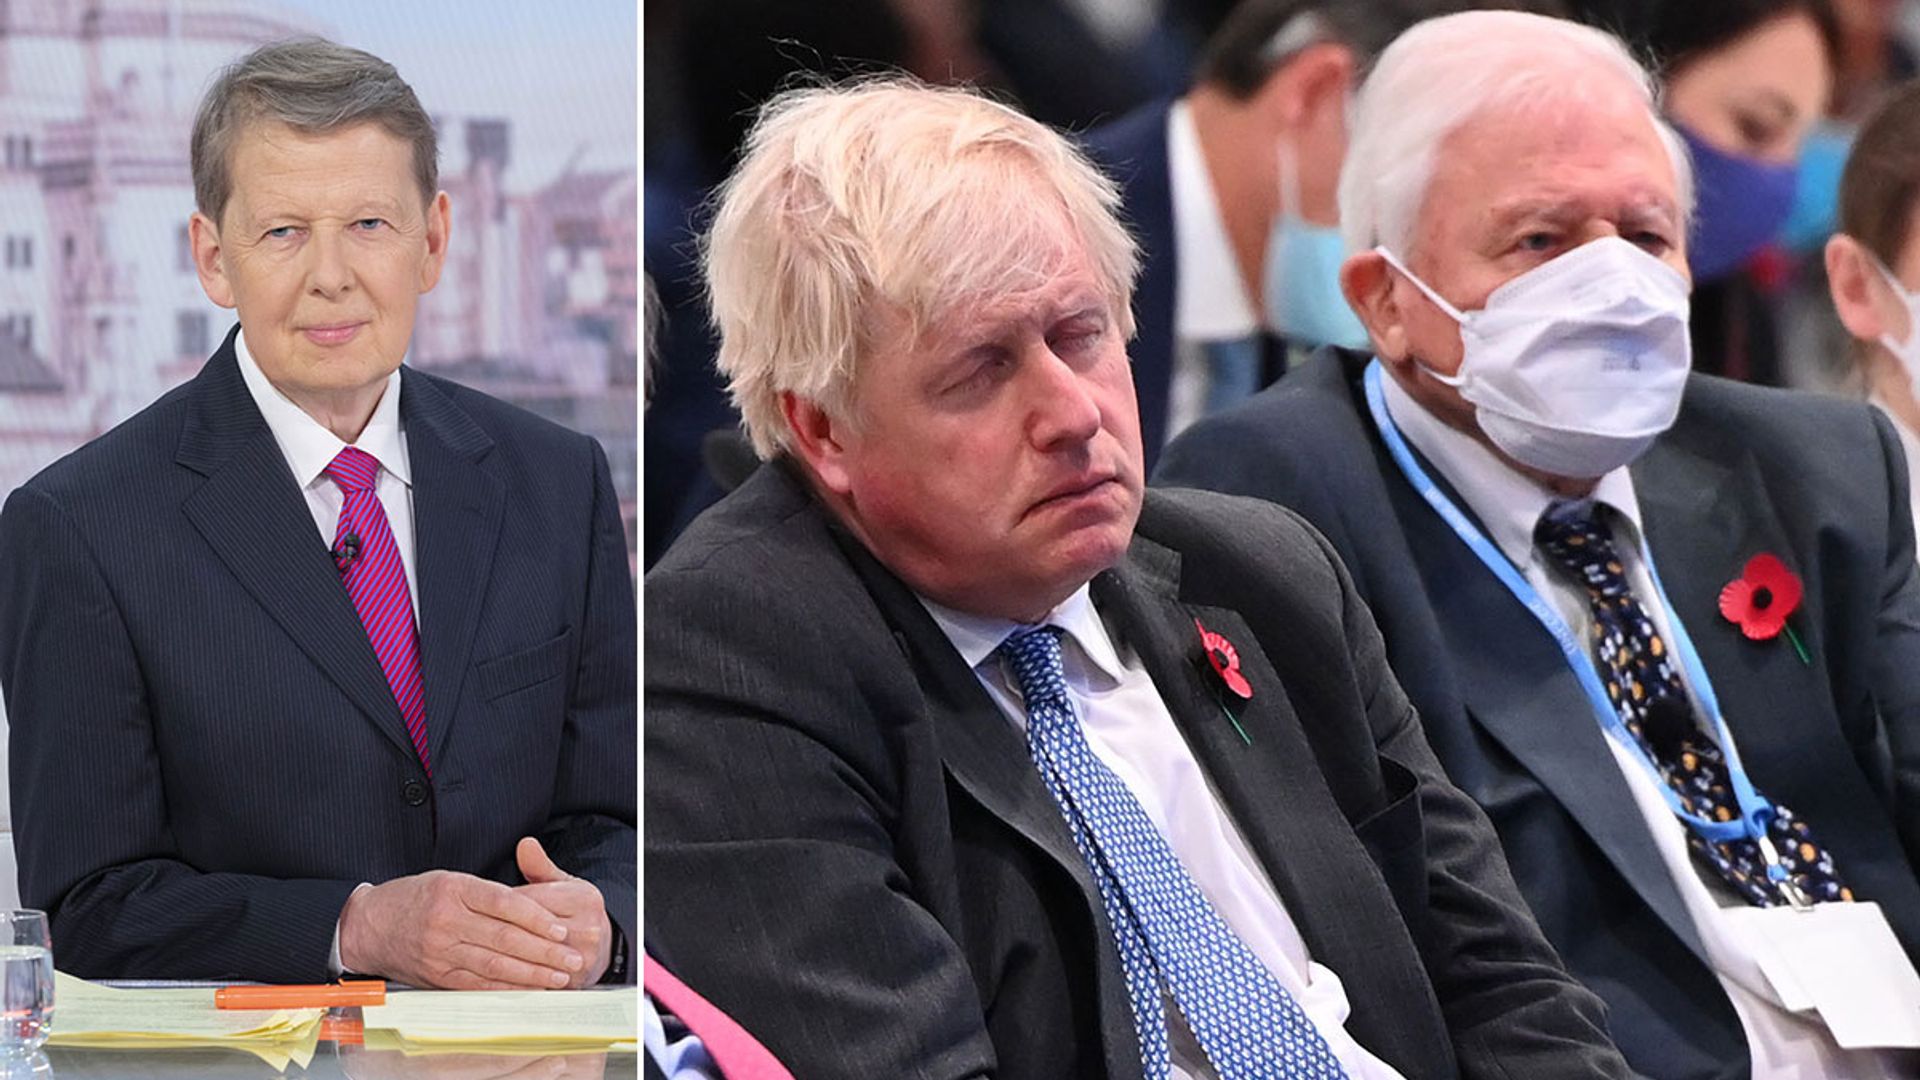 Bill Turnbull calls out Boris Johnson for sitting maskless next to David Attenborough